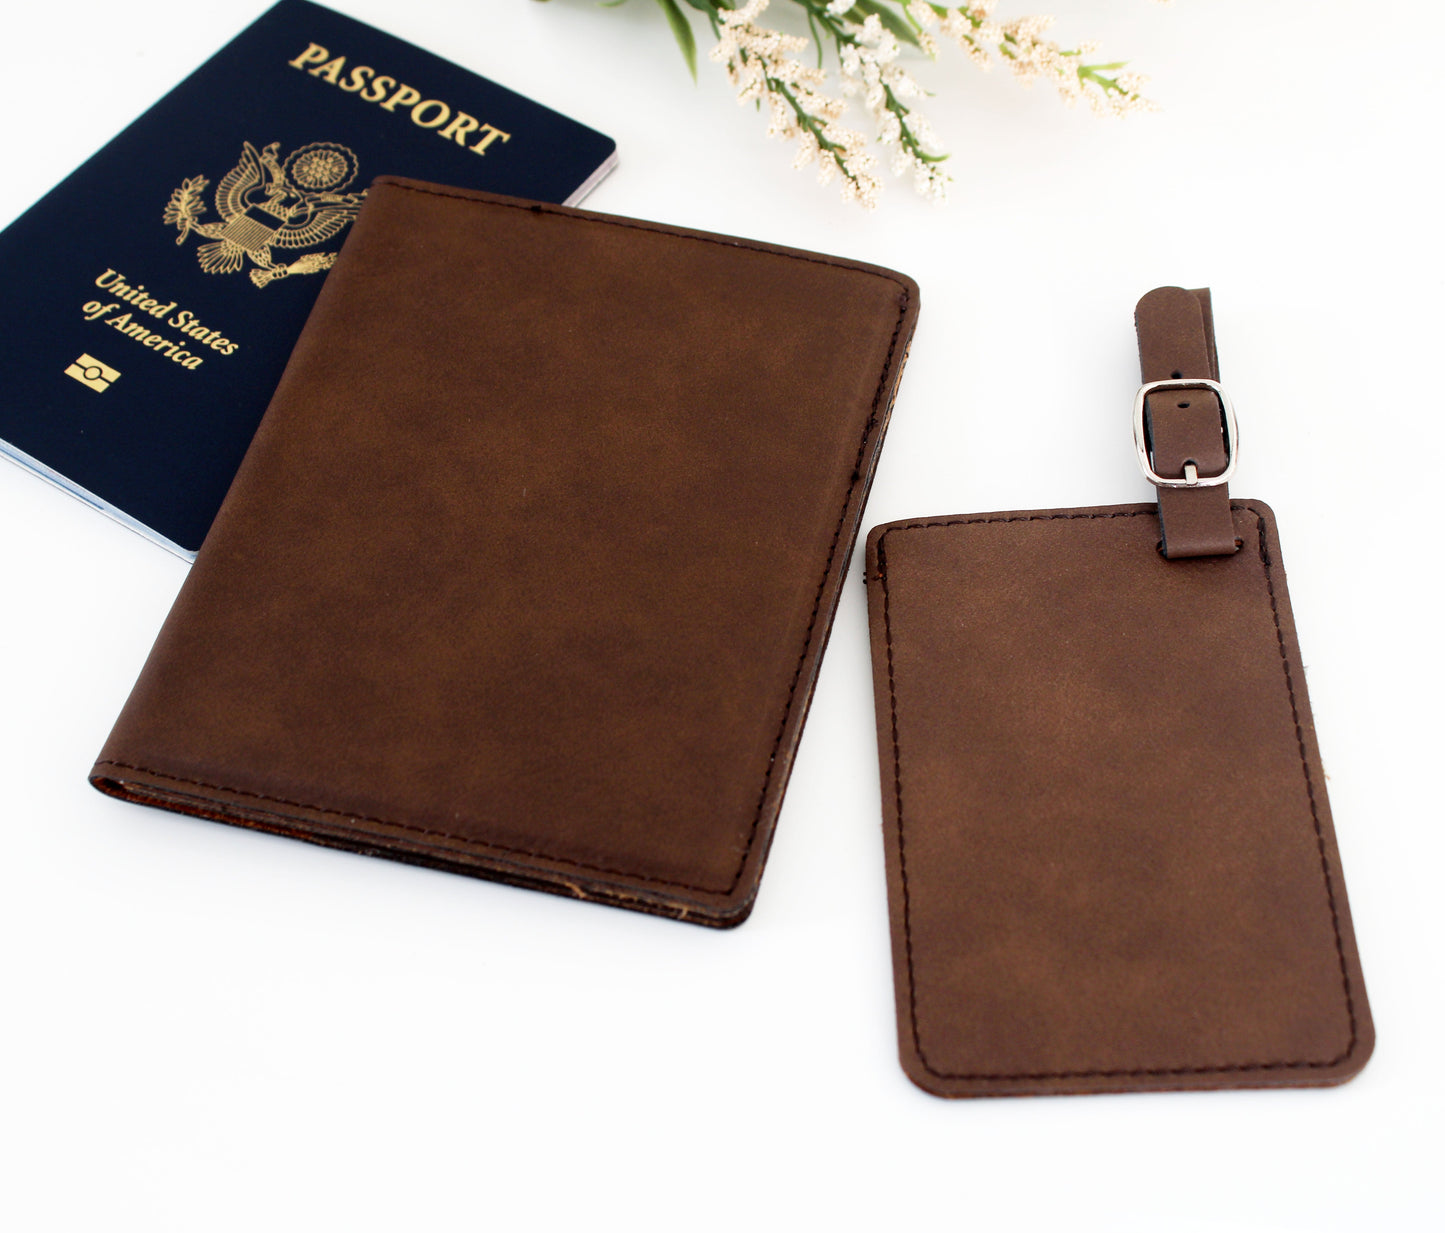 Passport Cover & Luggage Tag Set | Delgado